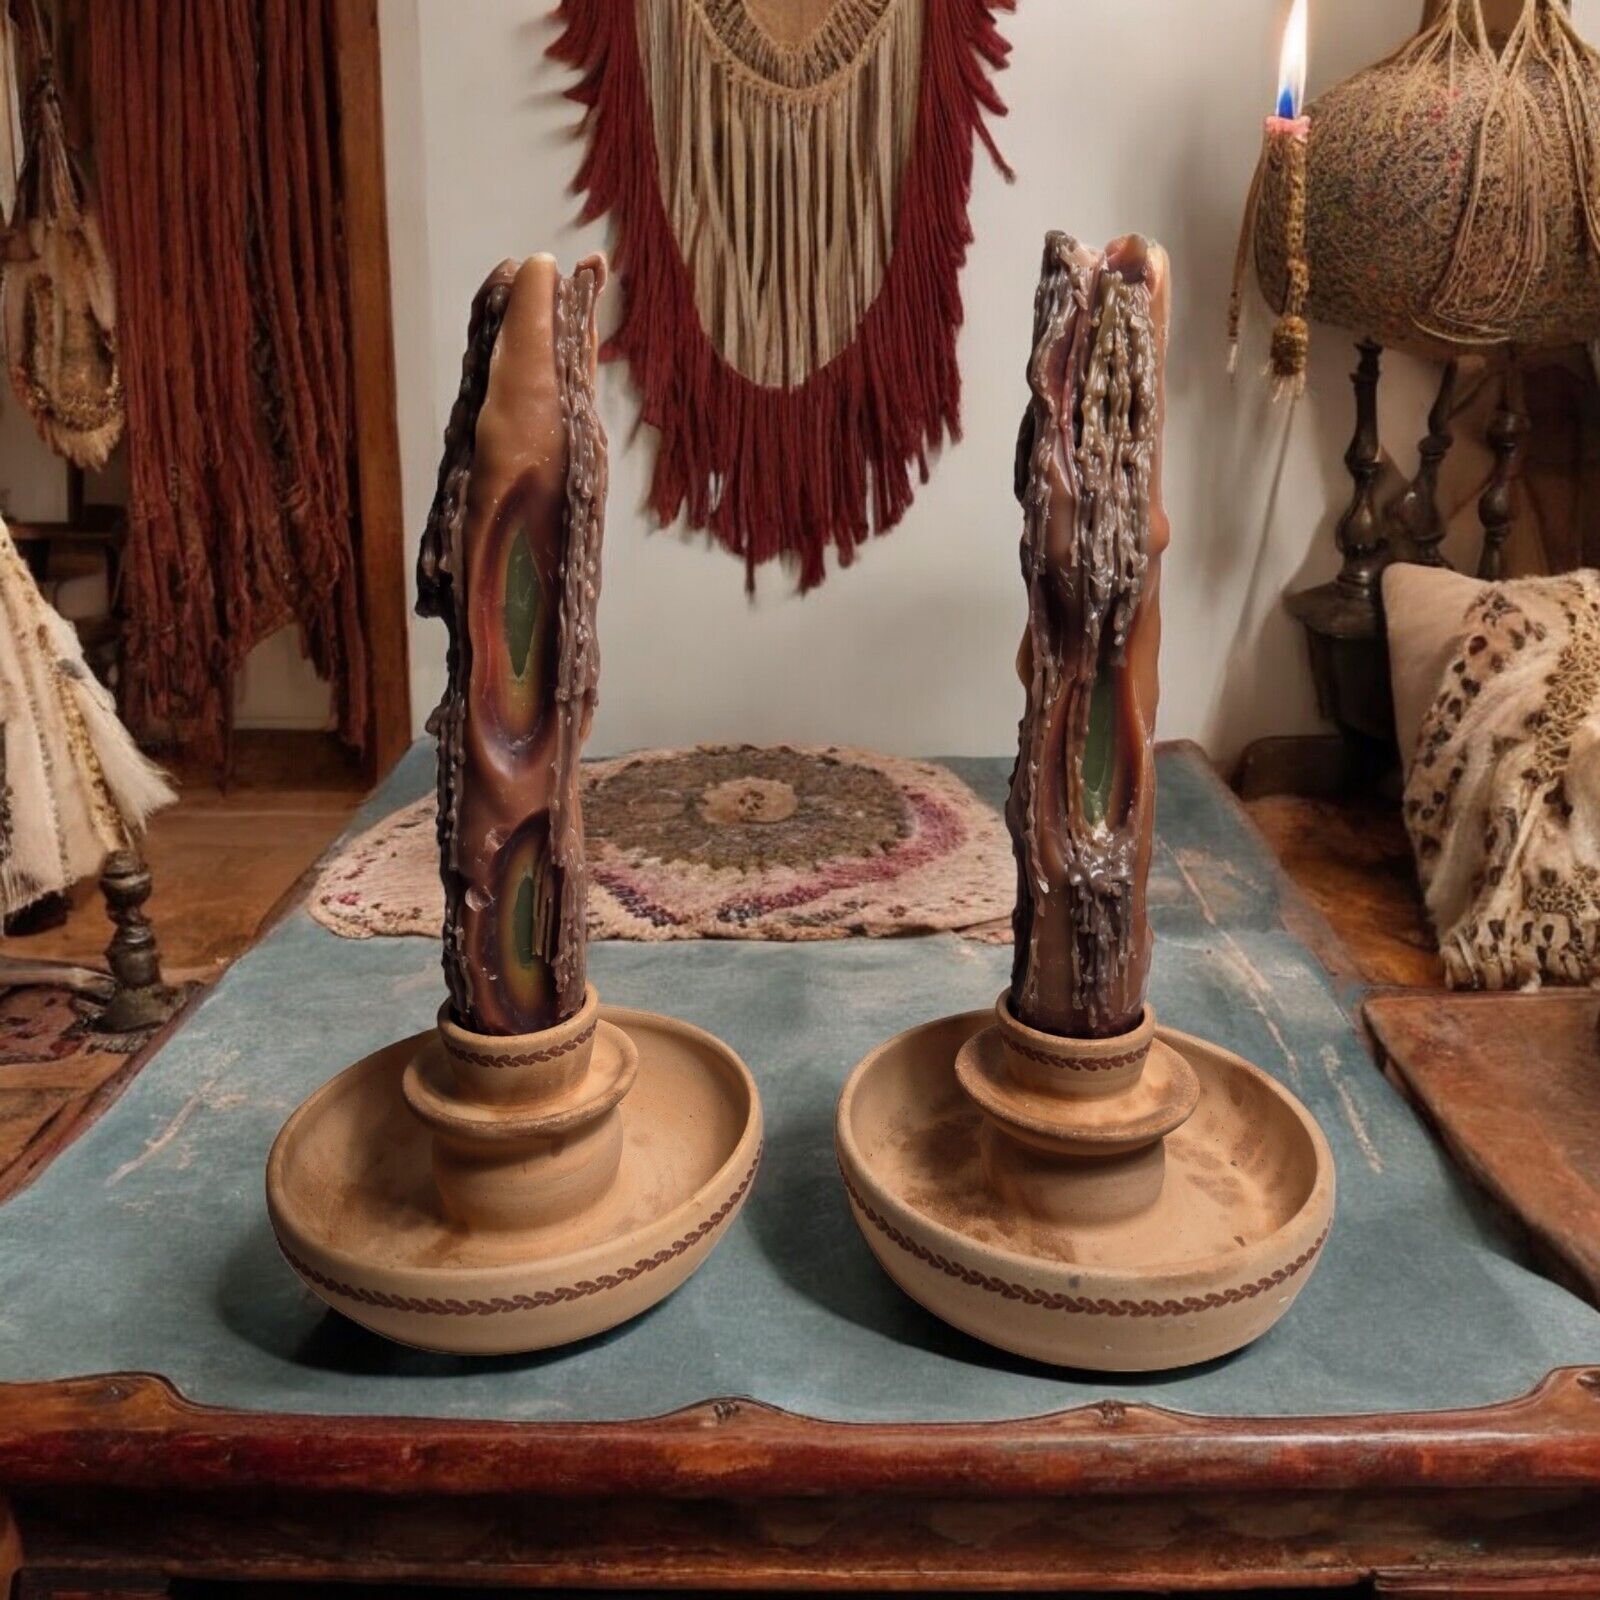 Rare Vintage Drip Candles With Terracotta Pots Holders  Hippie Retro Boho Decor 